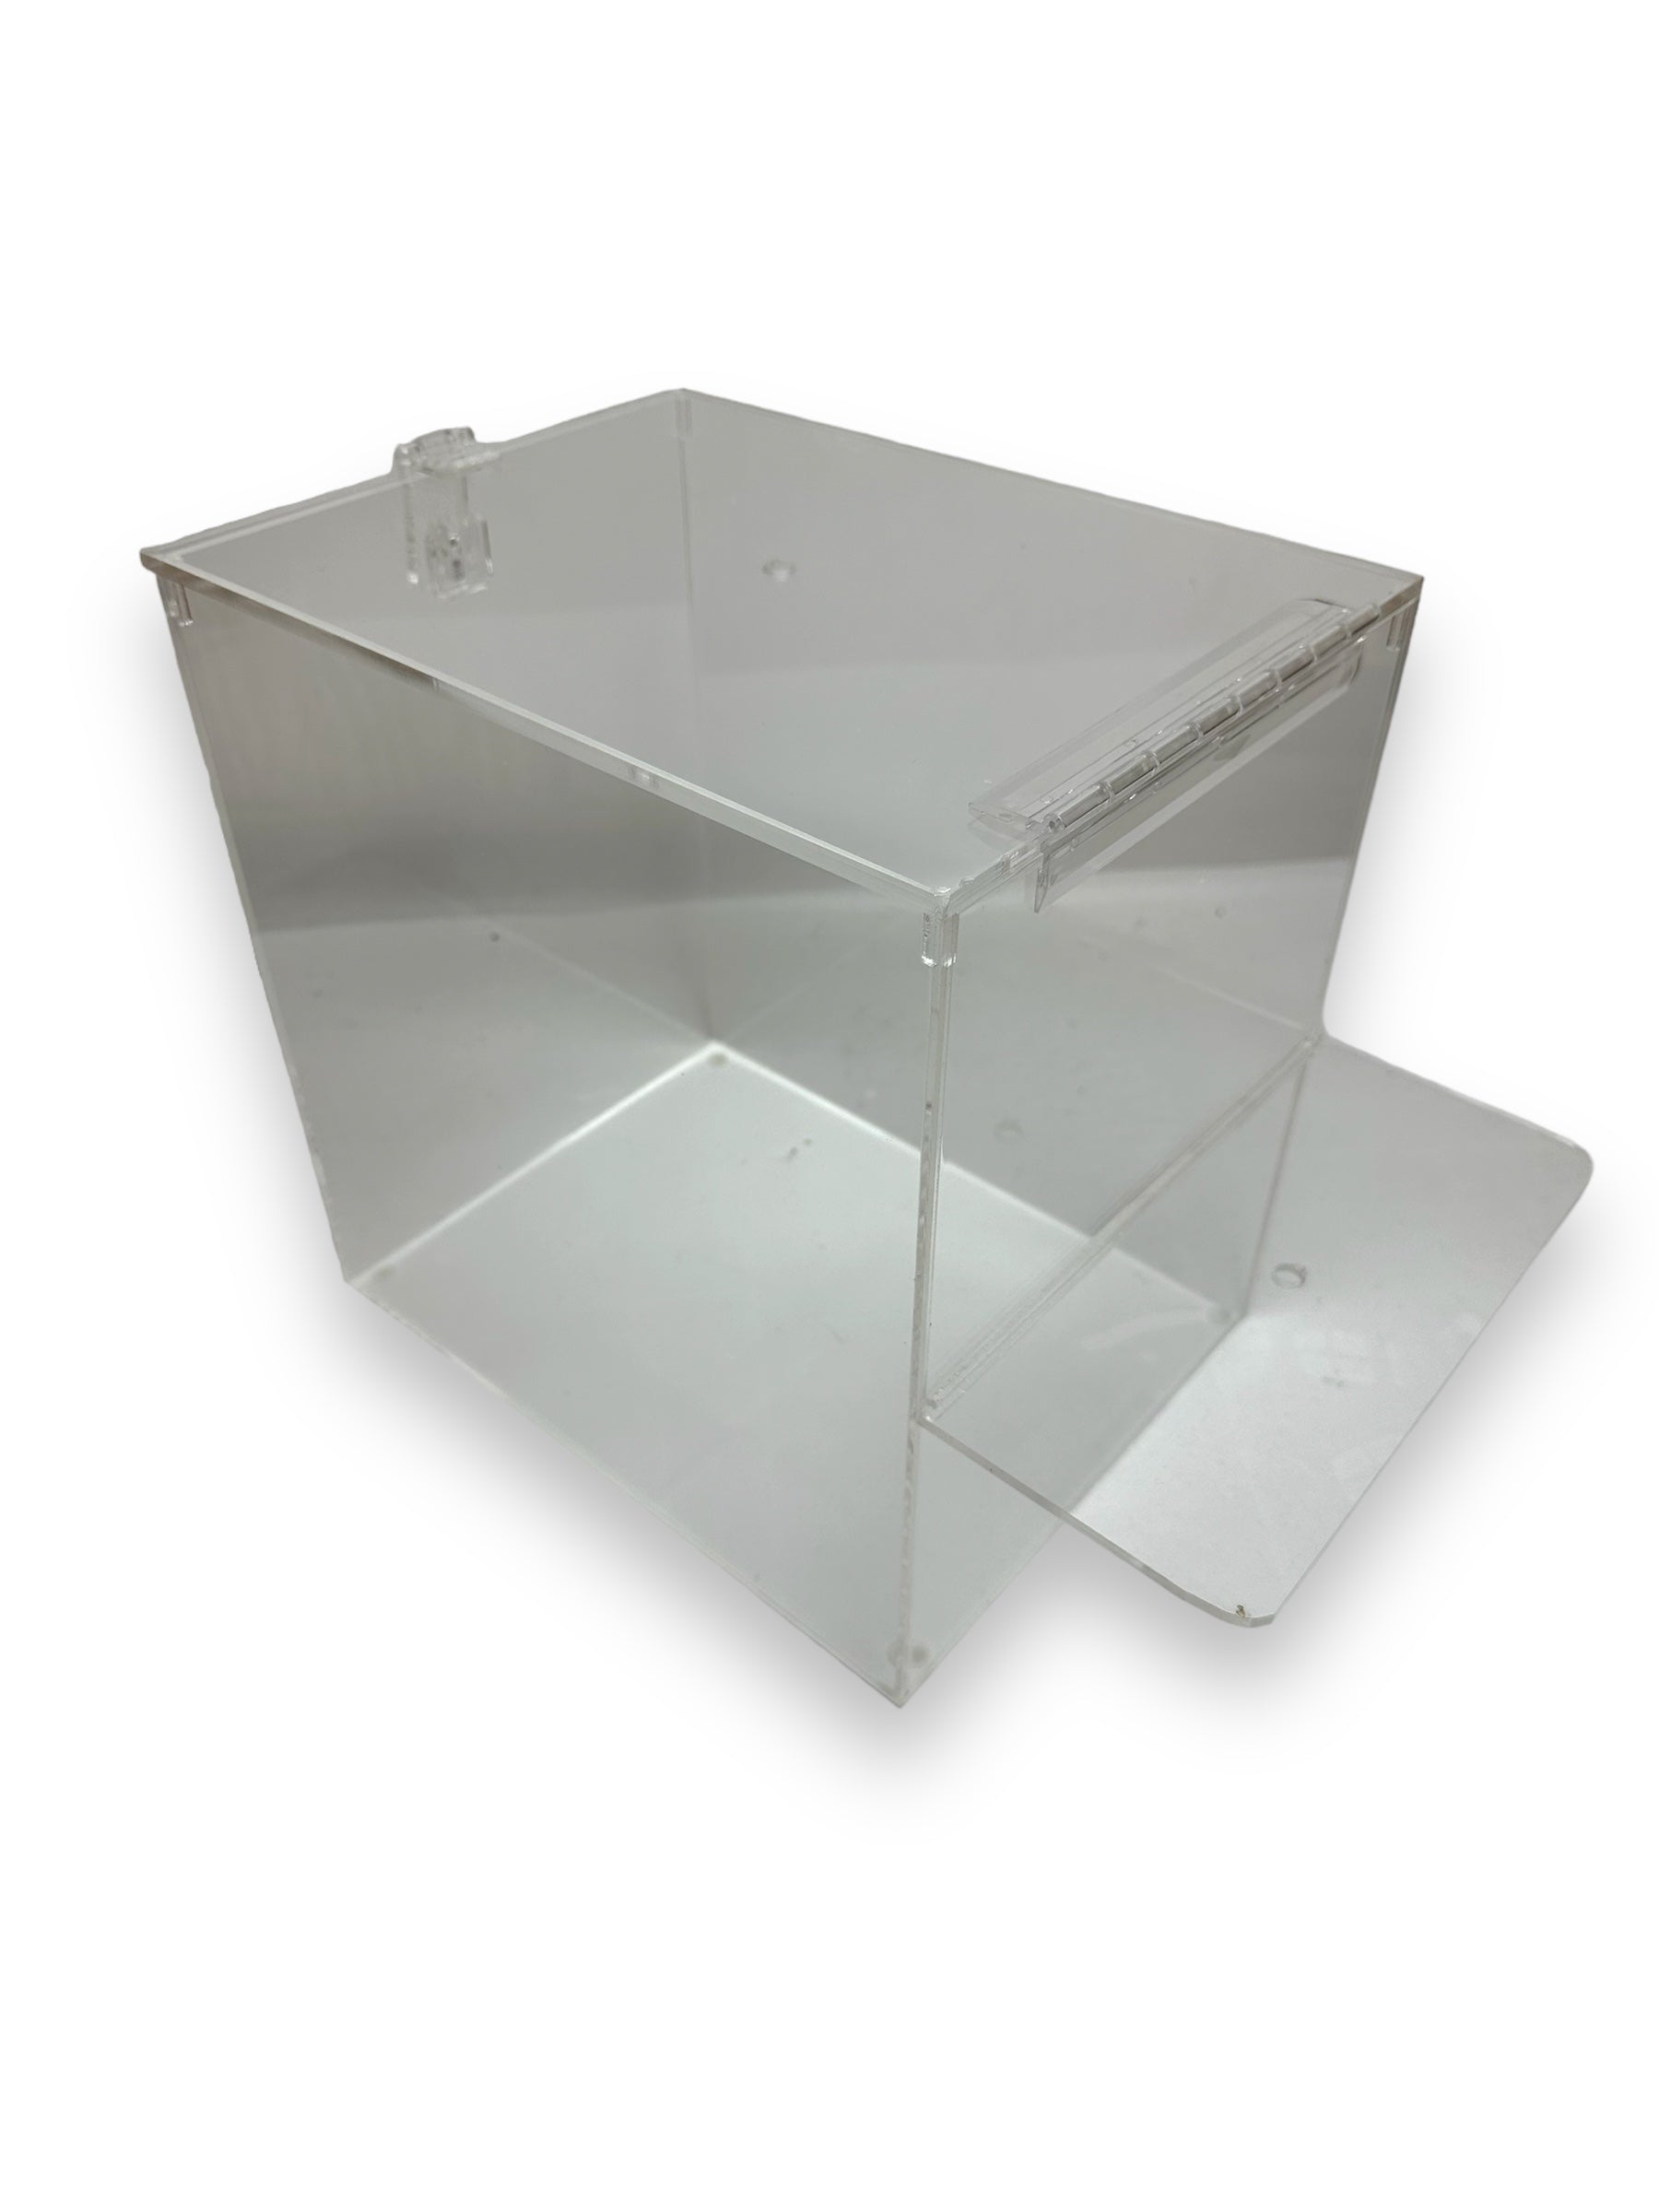 Plexiglass medical research box - CUSTOM ACRYLIC FABRICATION